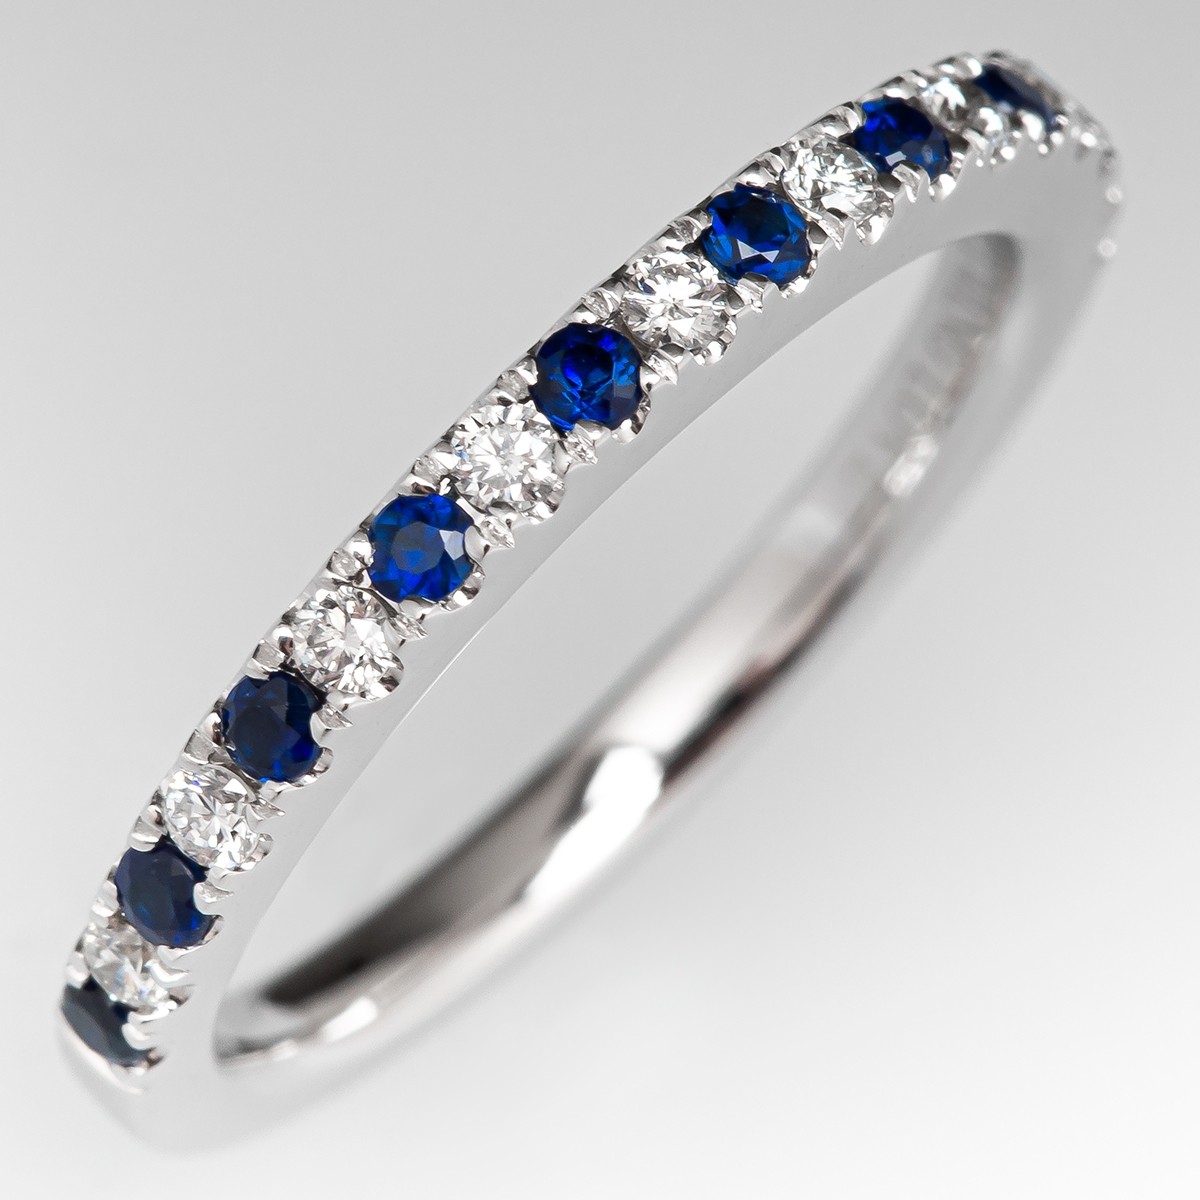 1ct Round Blue Sapphire Diamond Eternity Wedding Band Ring 14k White Gold Over